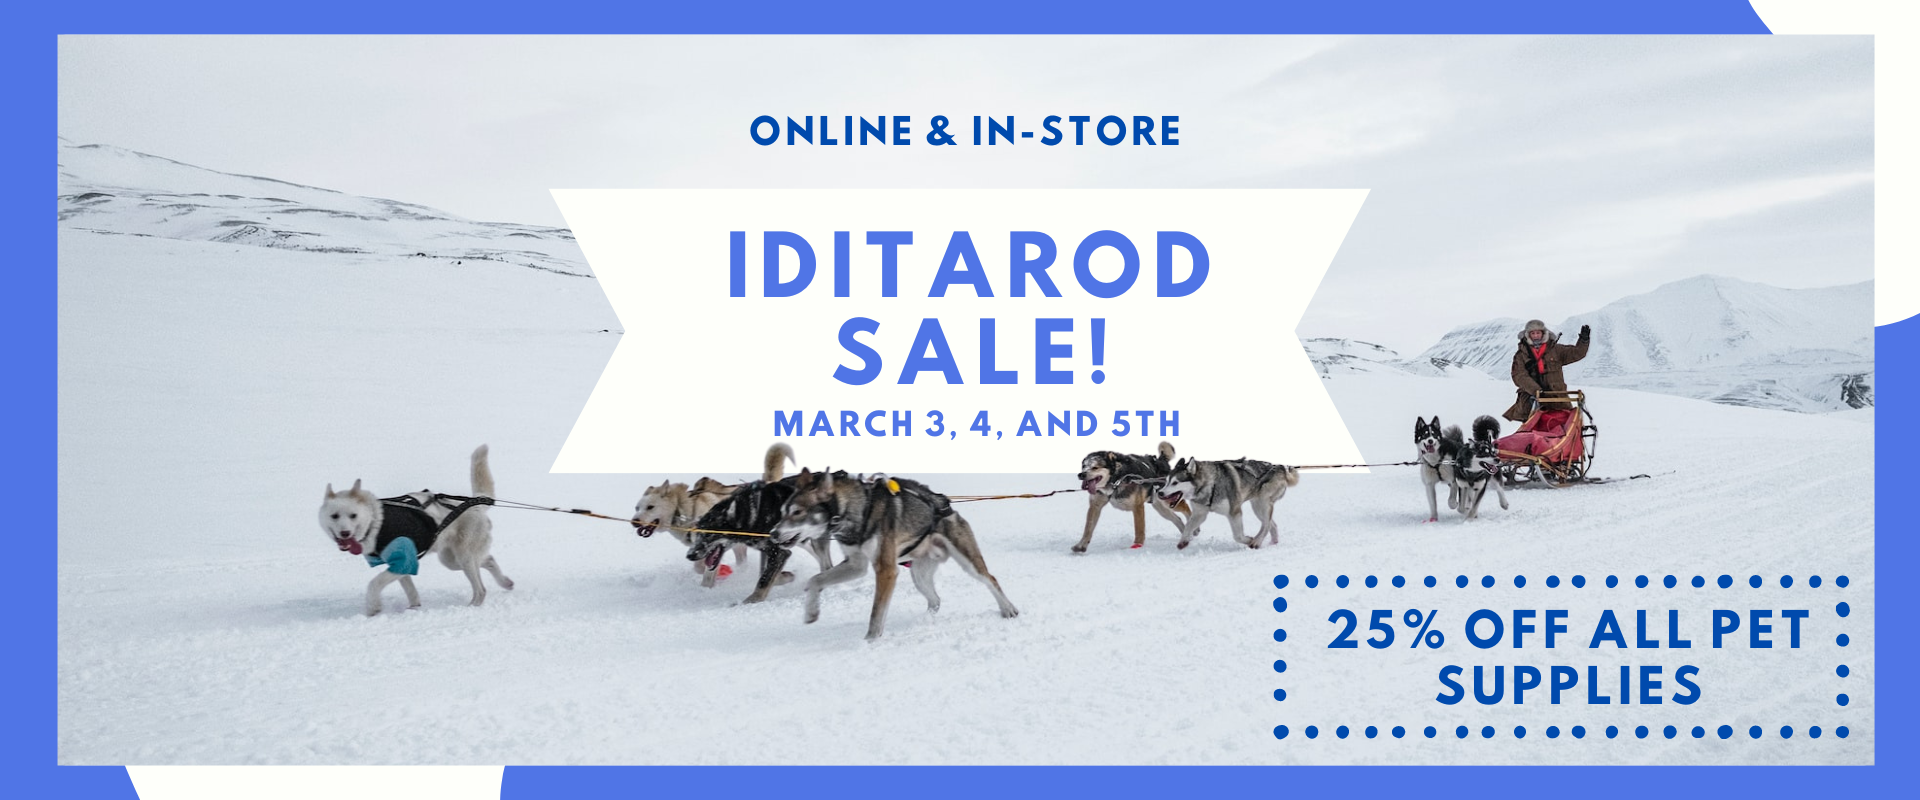 Iditarod Sales Teaser (1).png